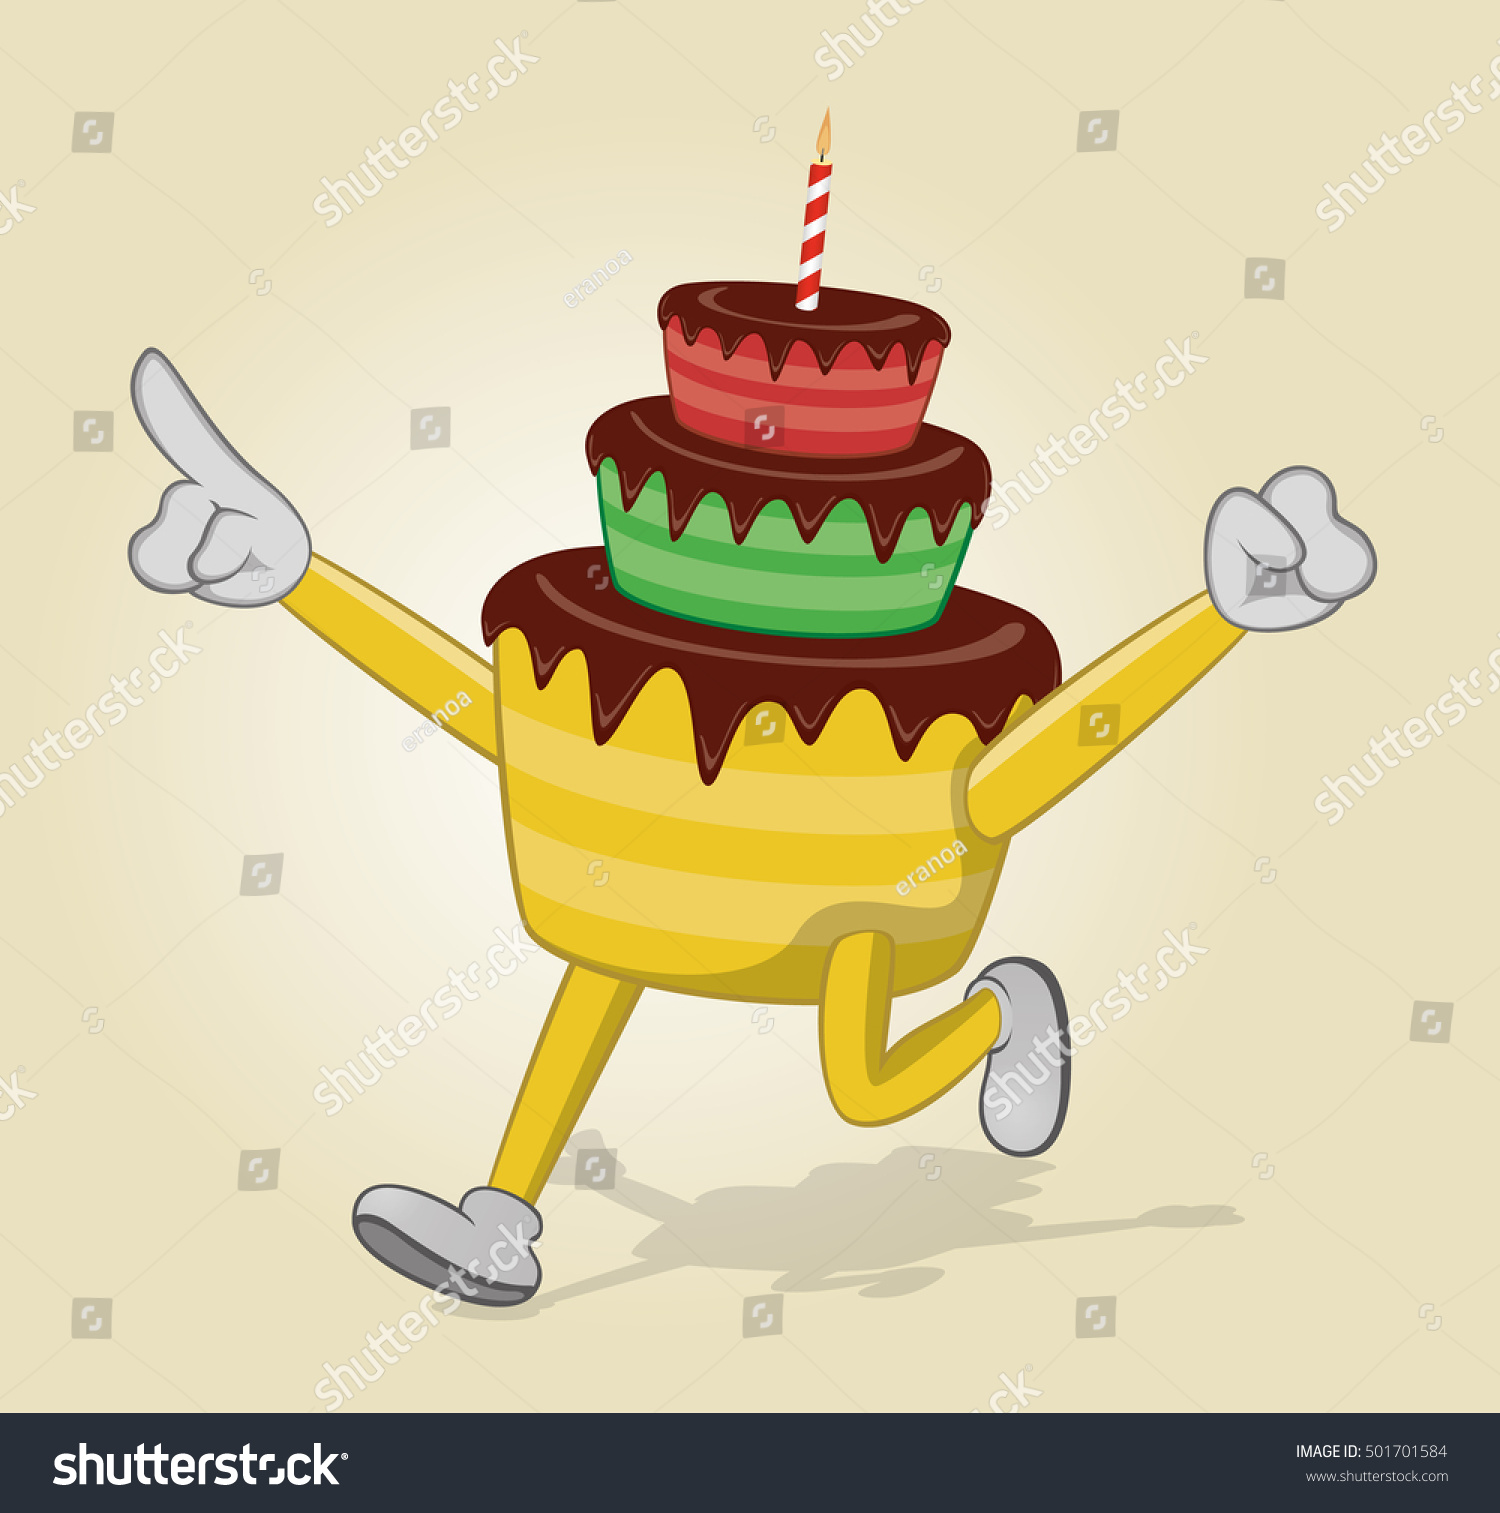 stock-vector-running-birthday-cake-number-one-501701584.jpg